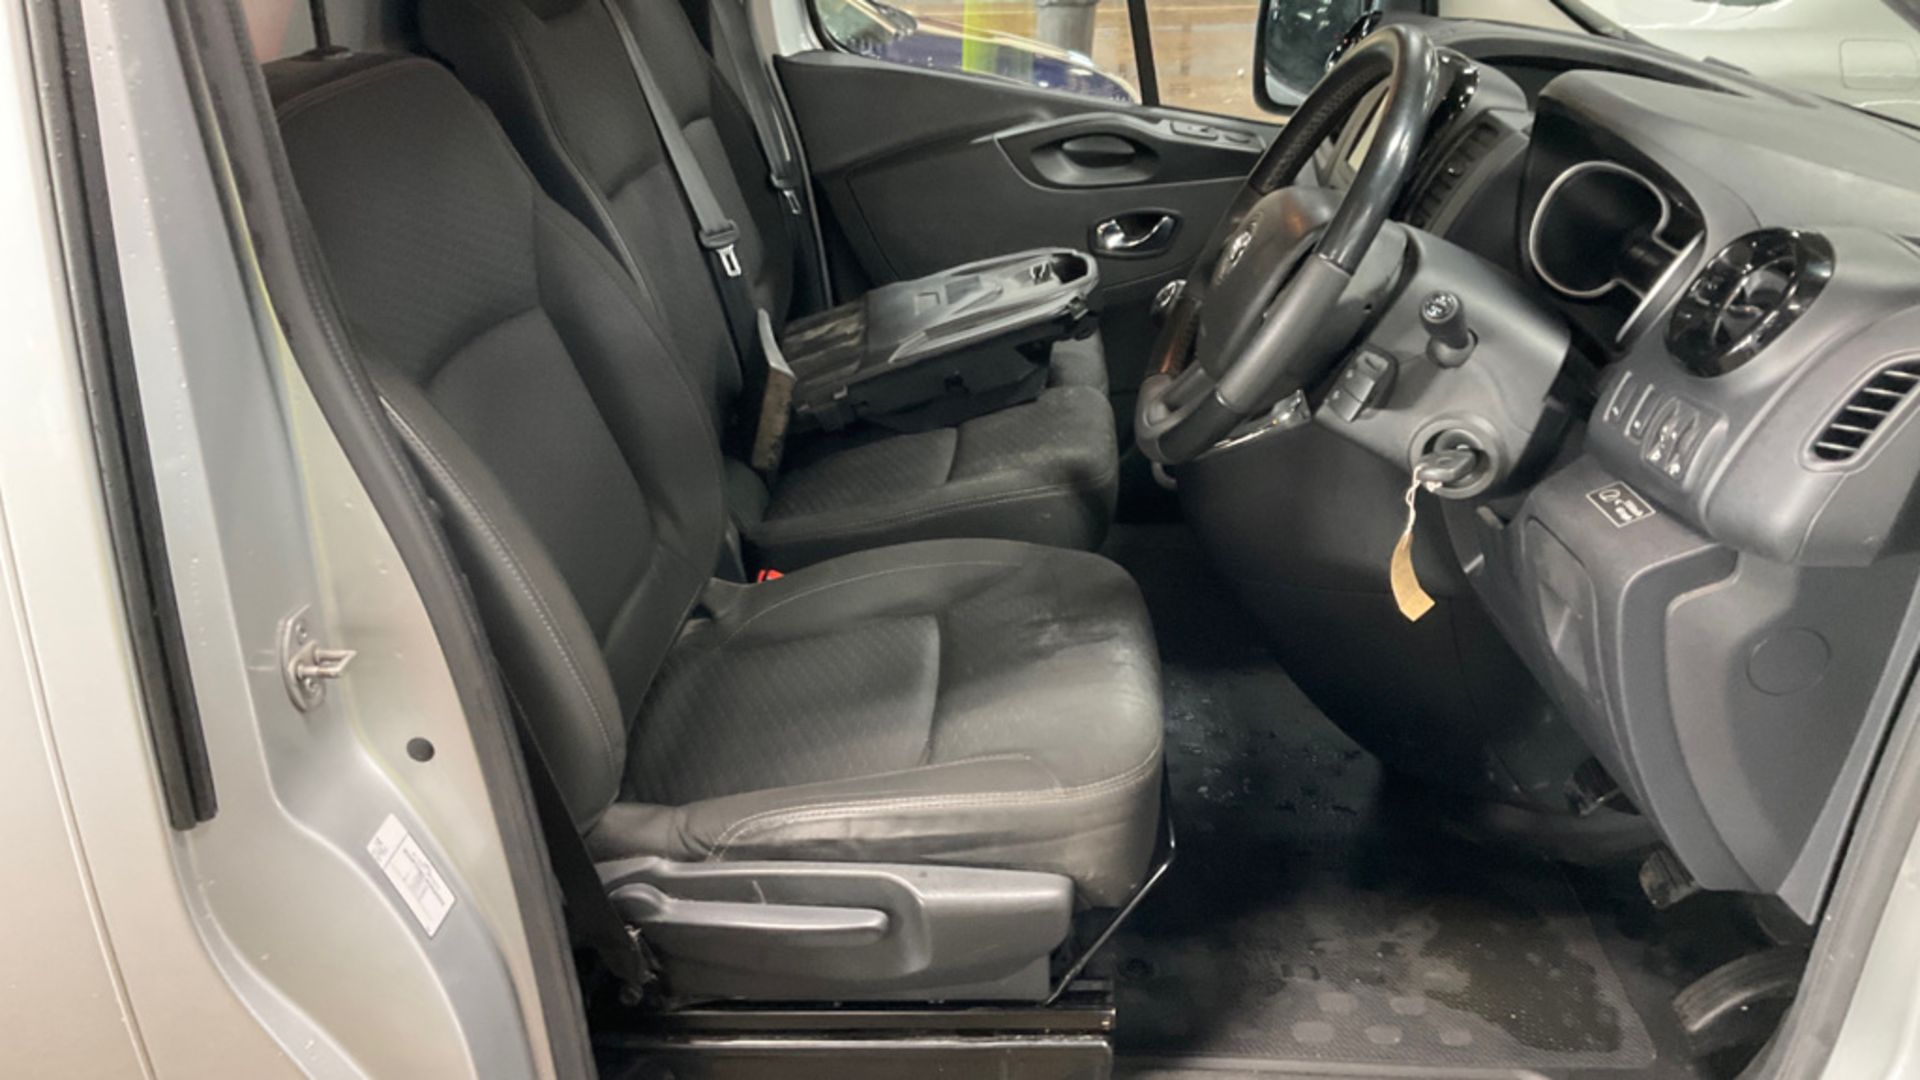 ** ON SALE ** Vauxhall Vivaro Sportive 2.9T 1.6 CDTI 125 Ecotec SWB 2019 '19 Reg' - Panel Van - Image 8 of 9